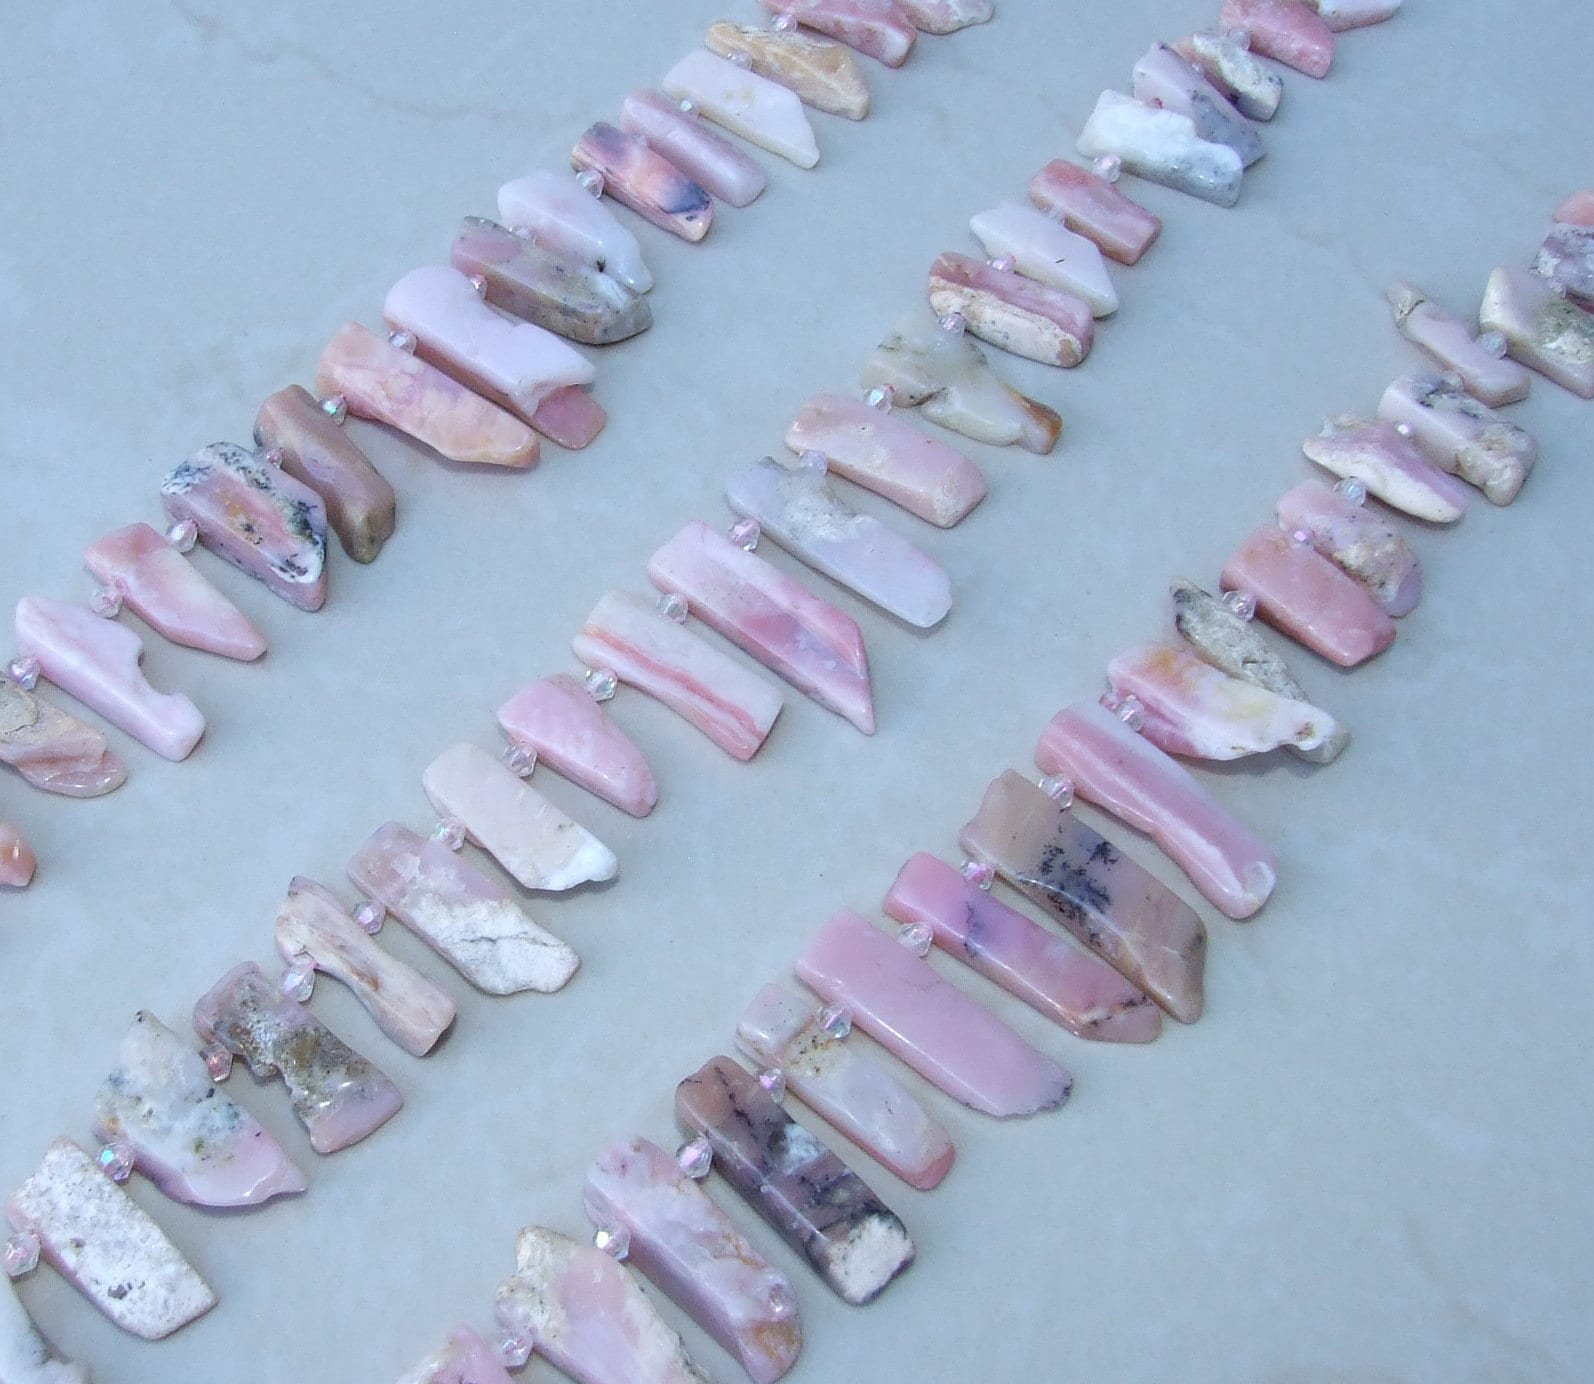 Small Peruvian Pink Opal Slice, Pink Opal Teeth, Pink Opal Bead Pendant Stick, Polished Pink Opal Slab, Gemstone Beads, 15mm to 30+mm